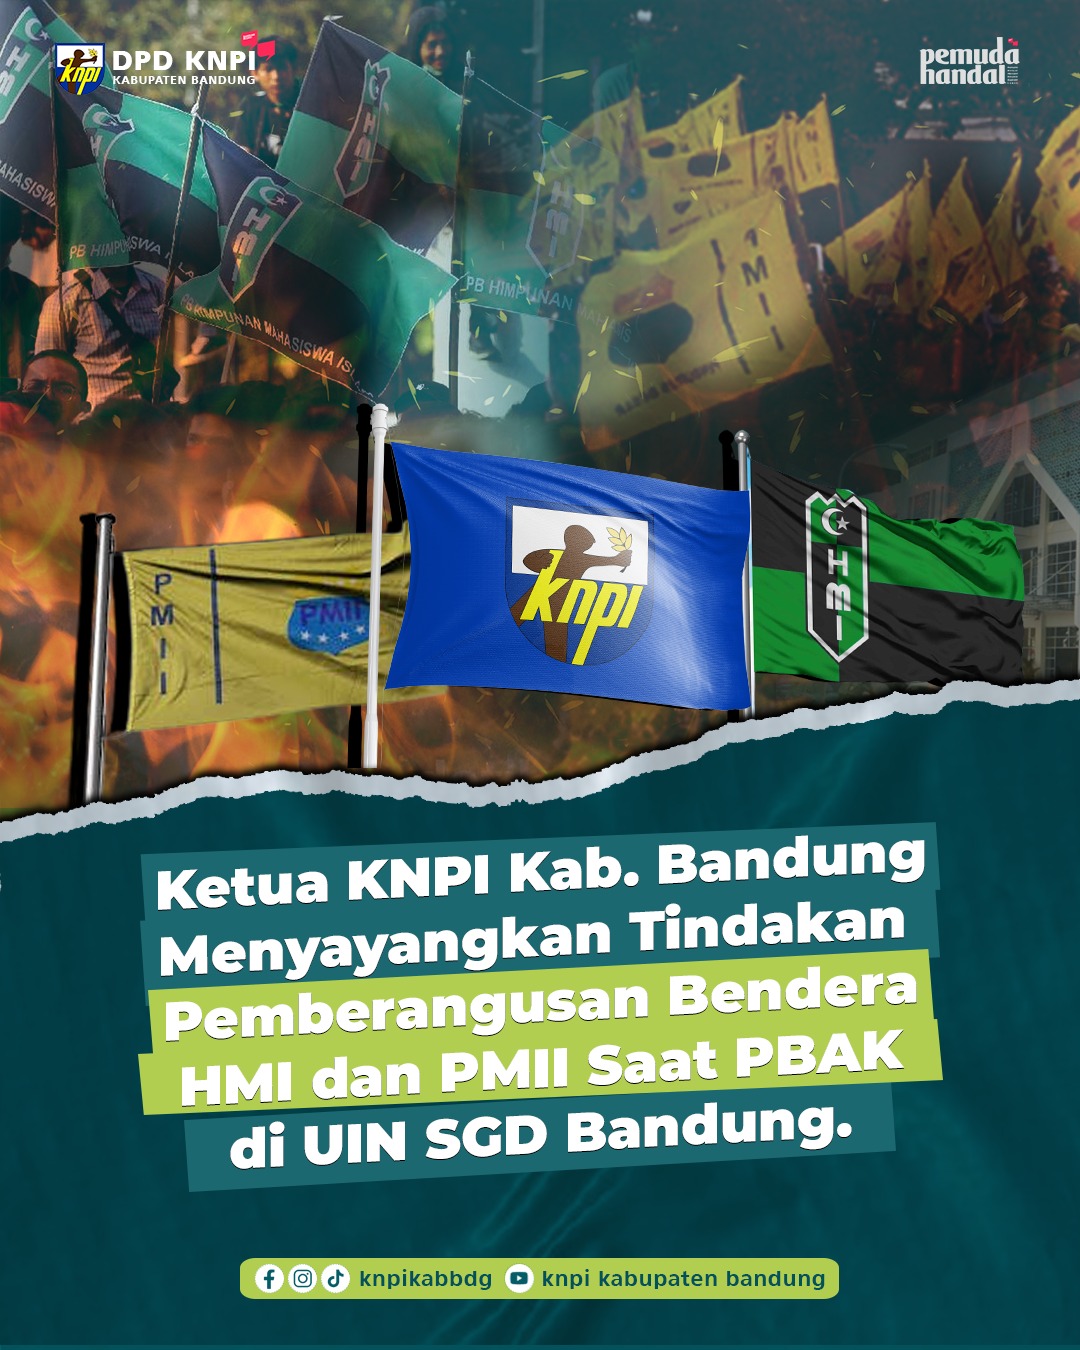 Ketua KNPI Kab. Bandung Menyayangkan Tindakan Pemberangusan Bendera HMI dan PMII Saat PBAK di UIN SGD Bandung